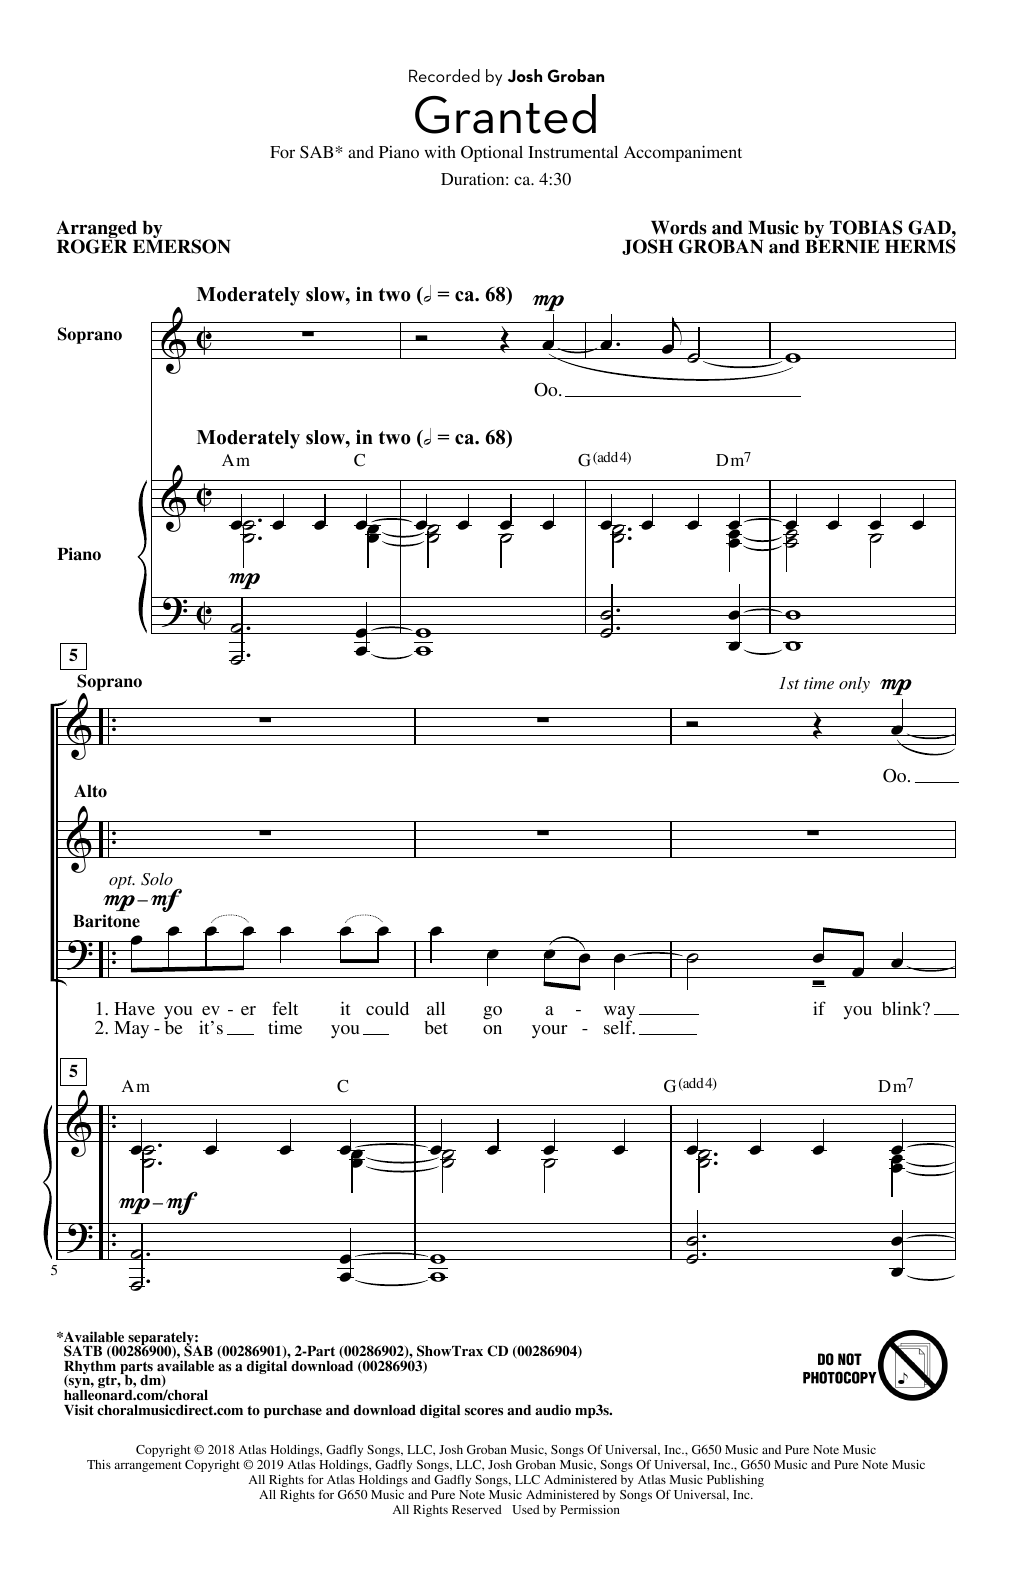 Josh Groban Granted (arr. Roger Emerson) sheet music notes and chords arranged for SAB Choir